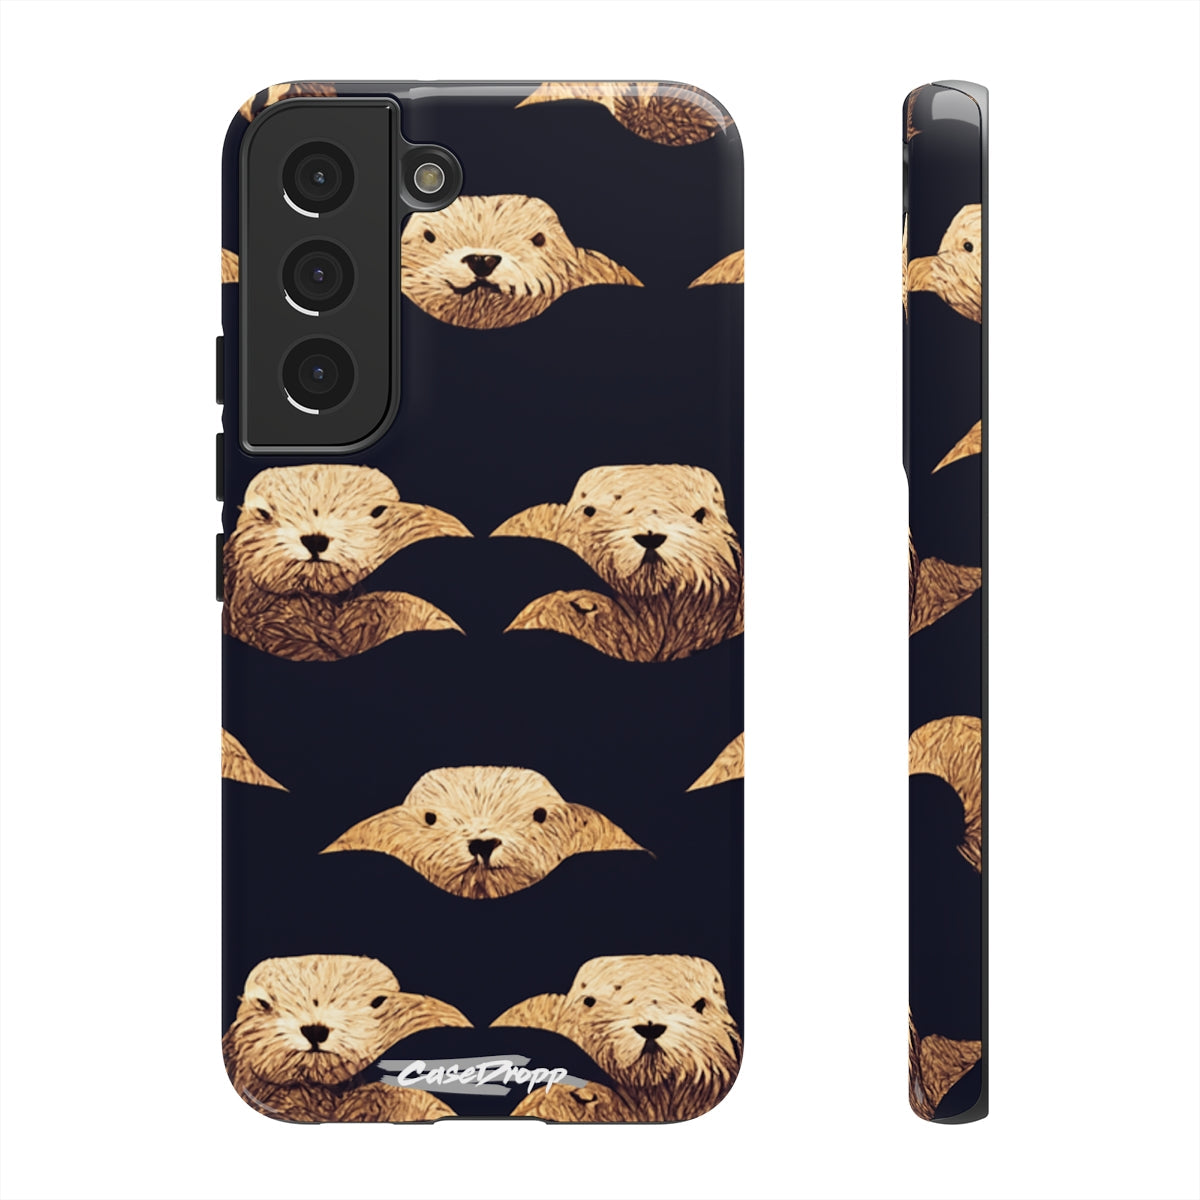 Otters - Tough iPhone / Samsung Case CaseDropp